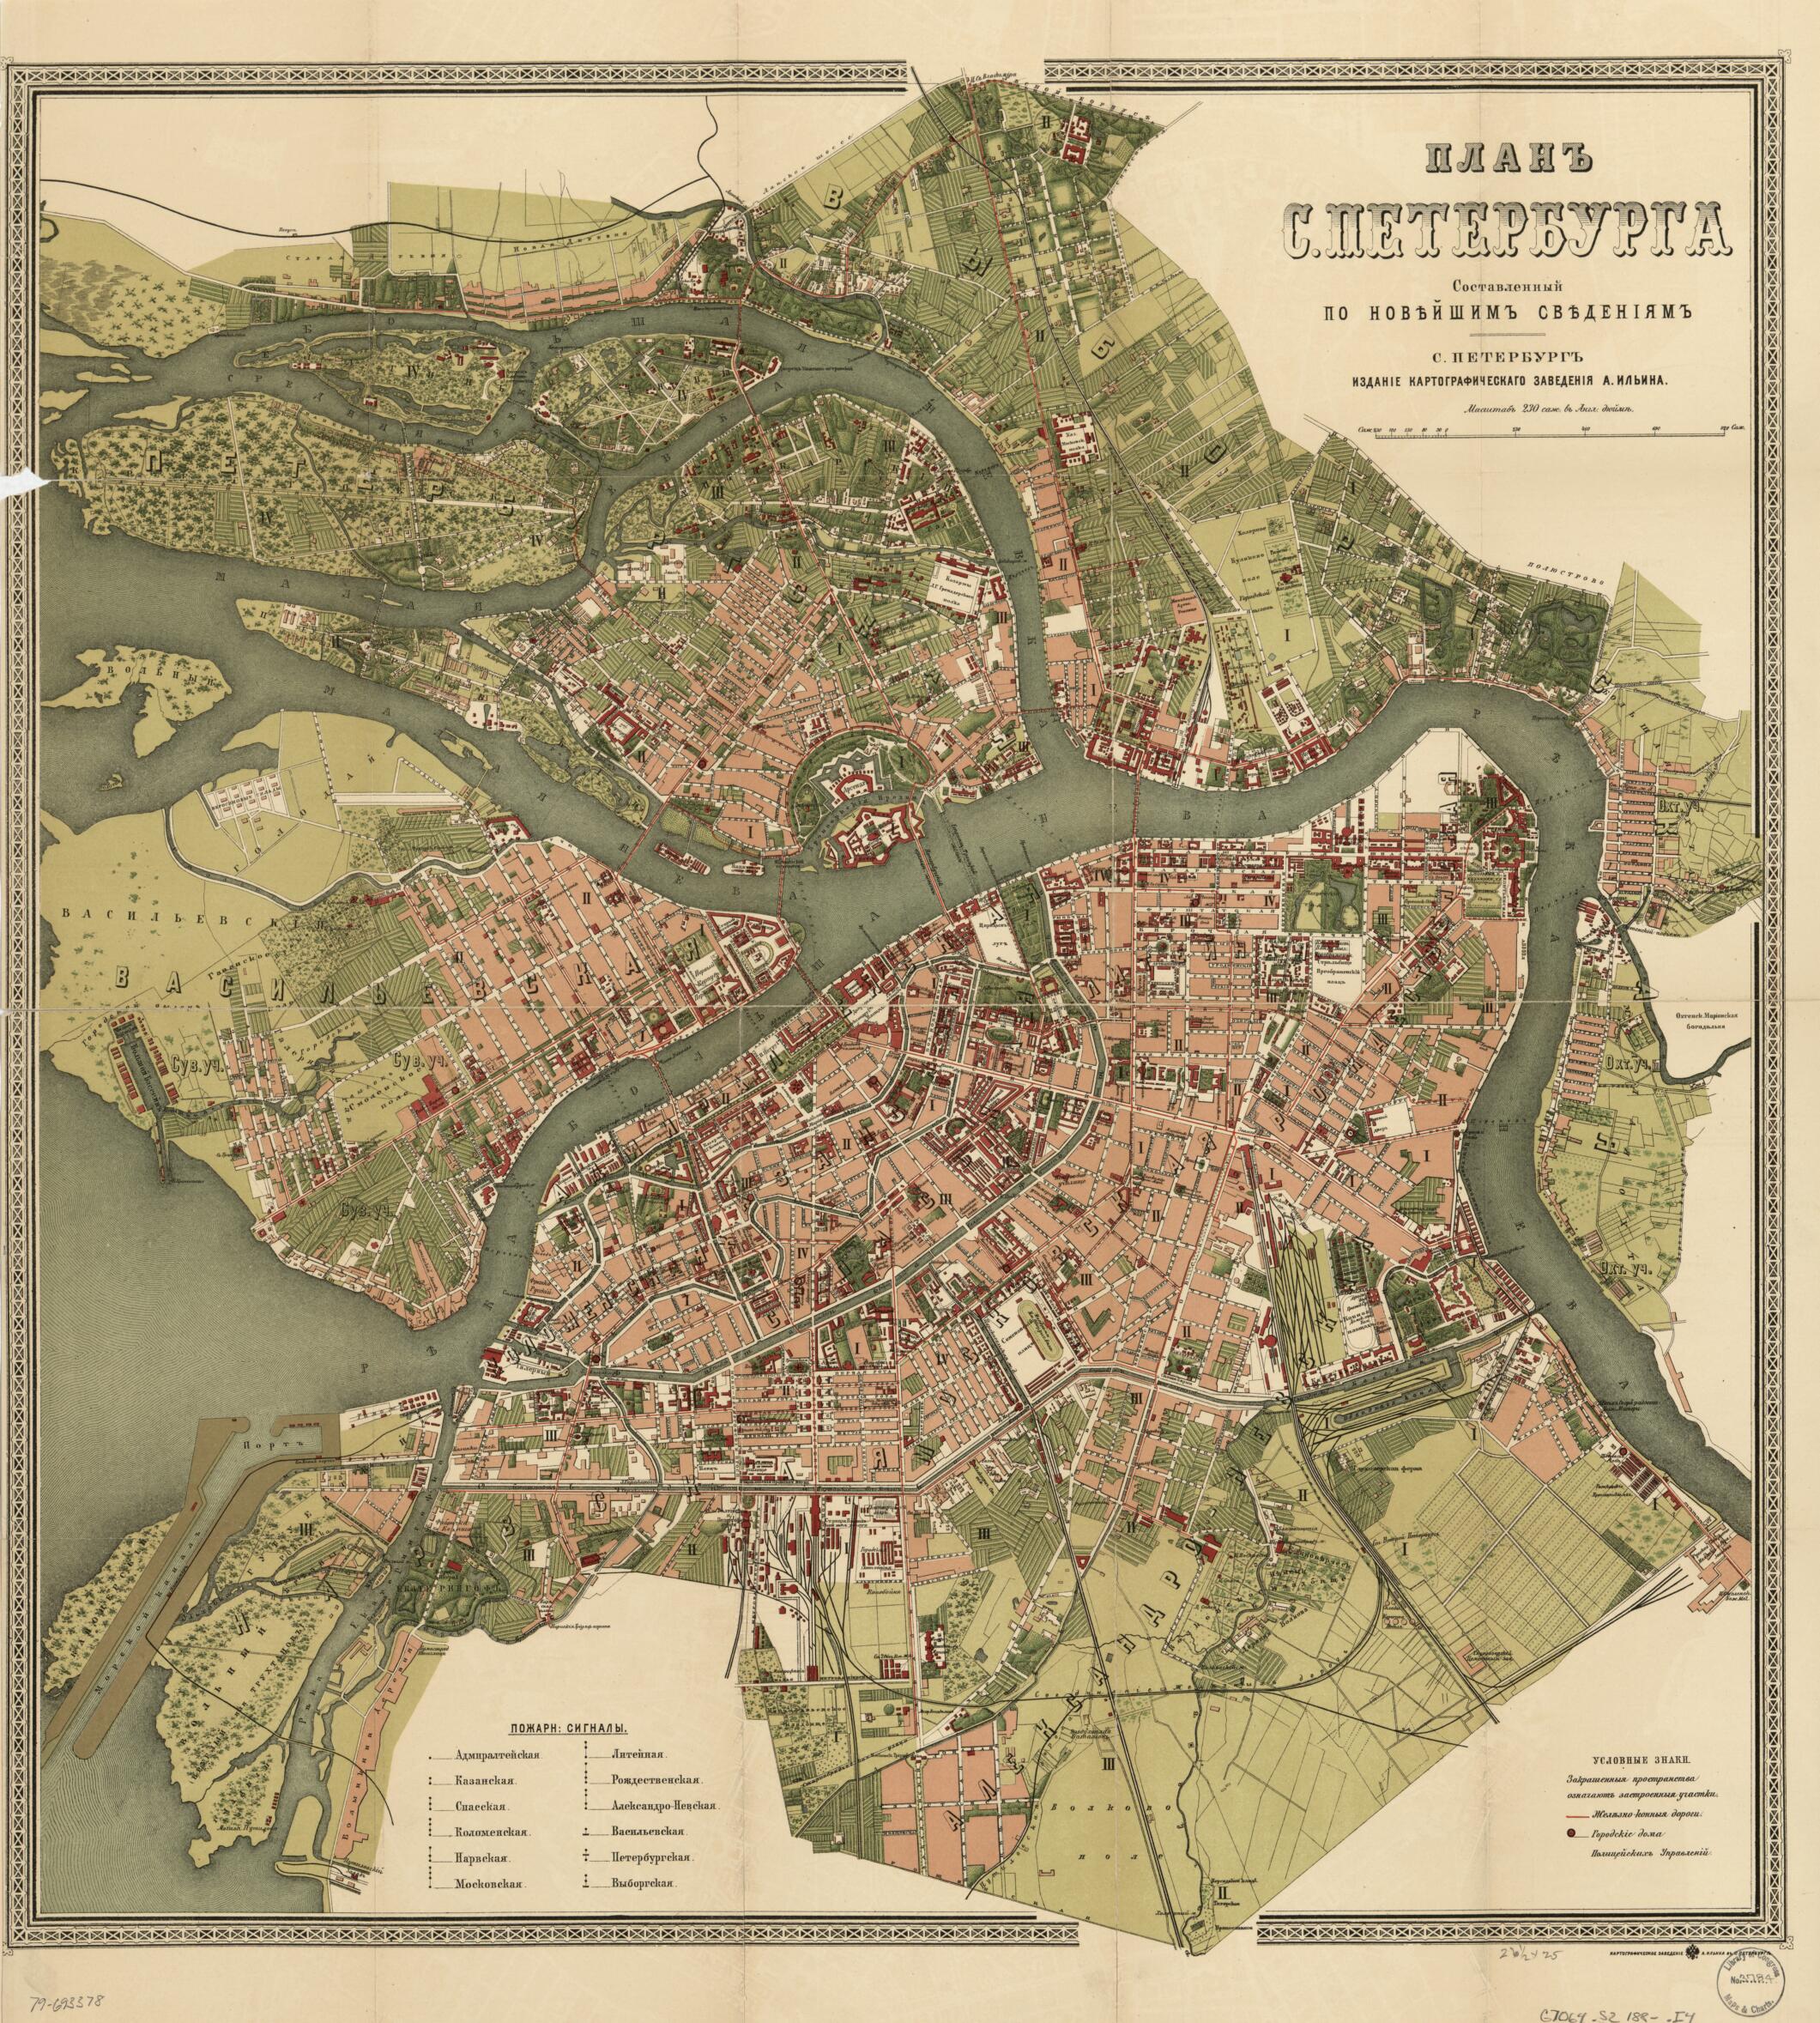 This old map of Plan S. Peterburga : Sostavlennyĭ Po Novi︠e︡ĭshim Svi︠e︡denīi︠a︡m from 1880 was created by  Kartograficheskoe Zavedenīe A. Ilʹina in 1880